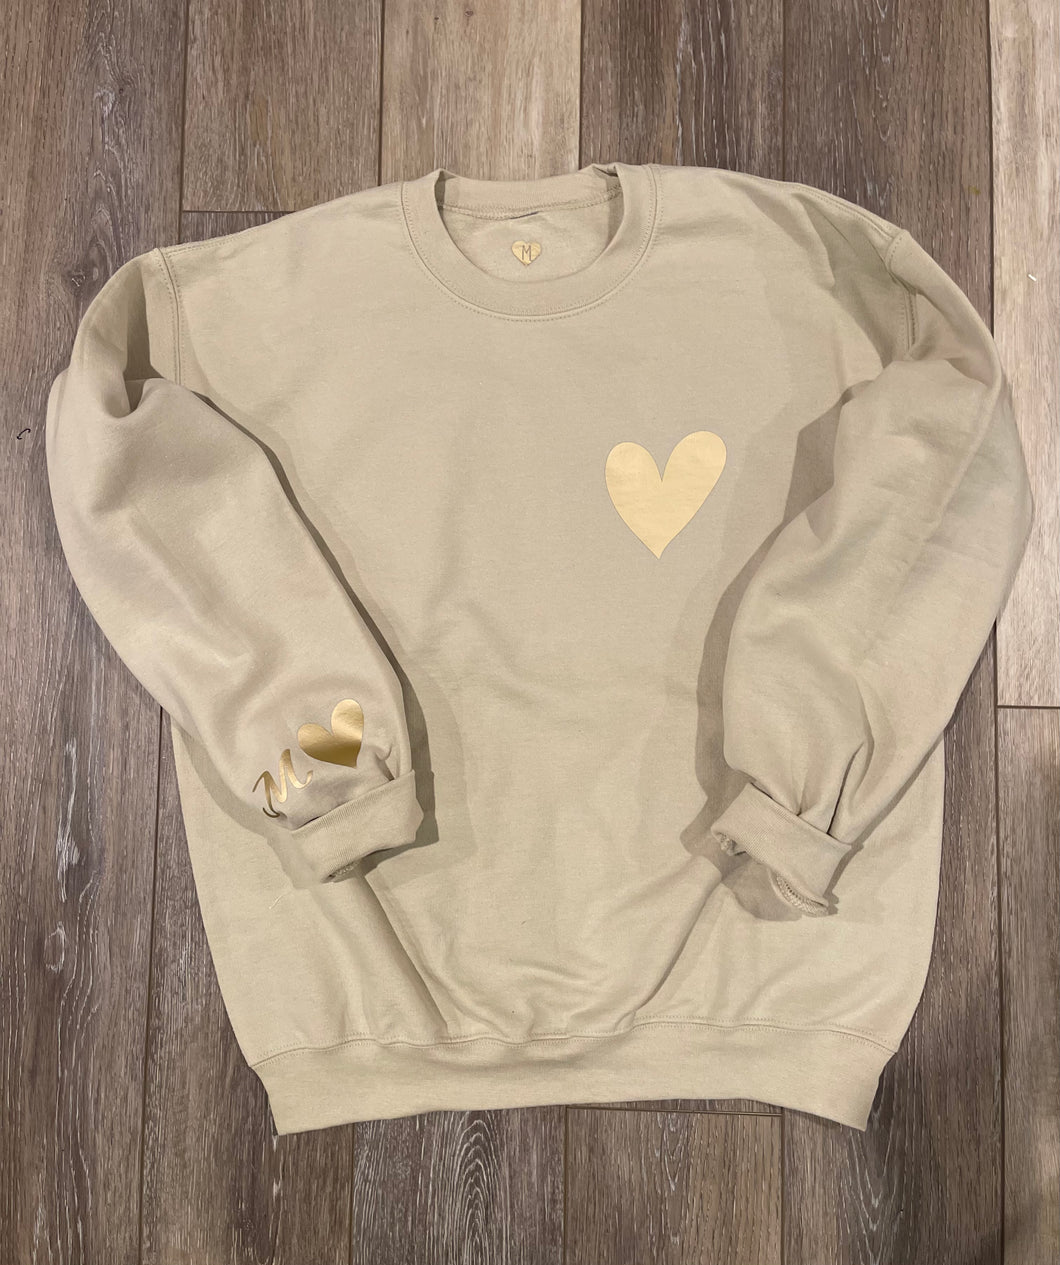 Heart and Initial Sweatshirt